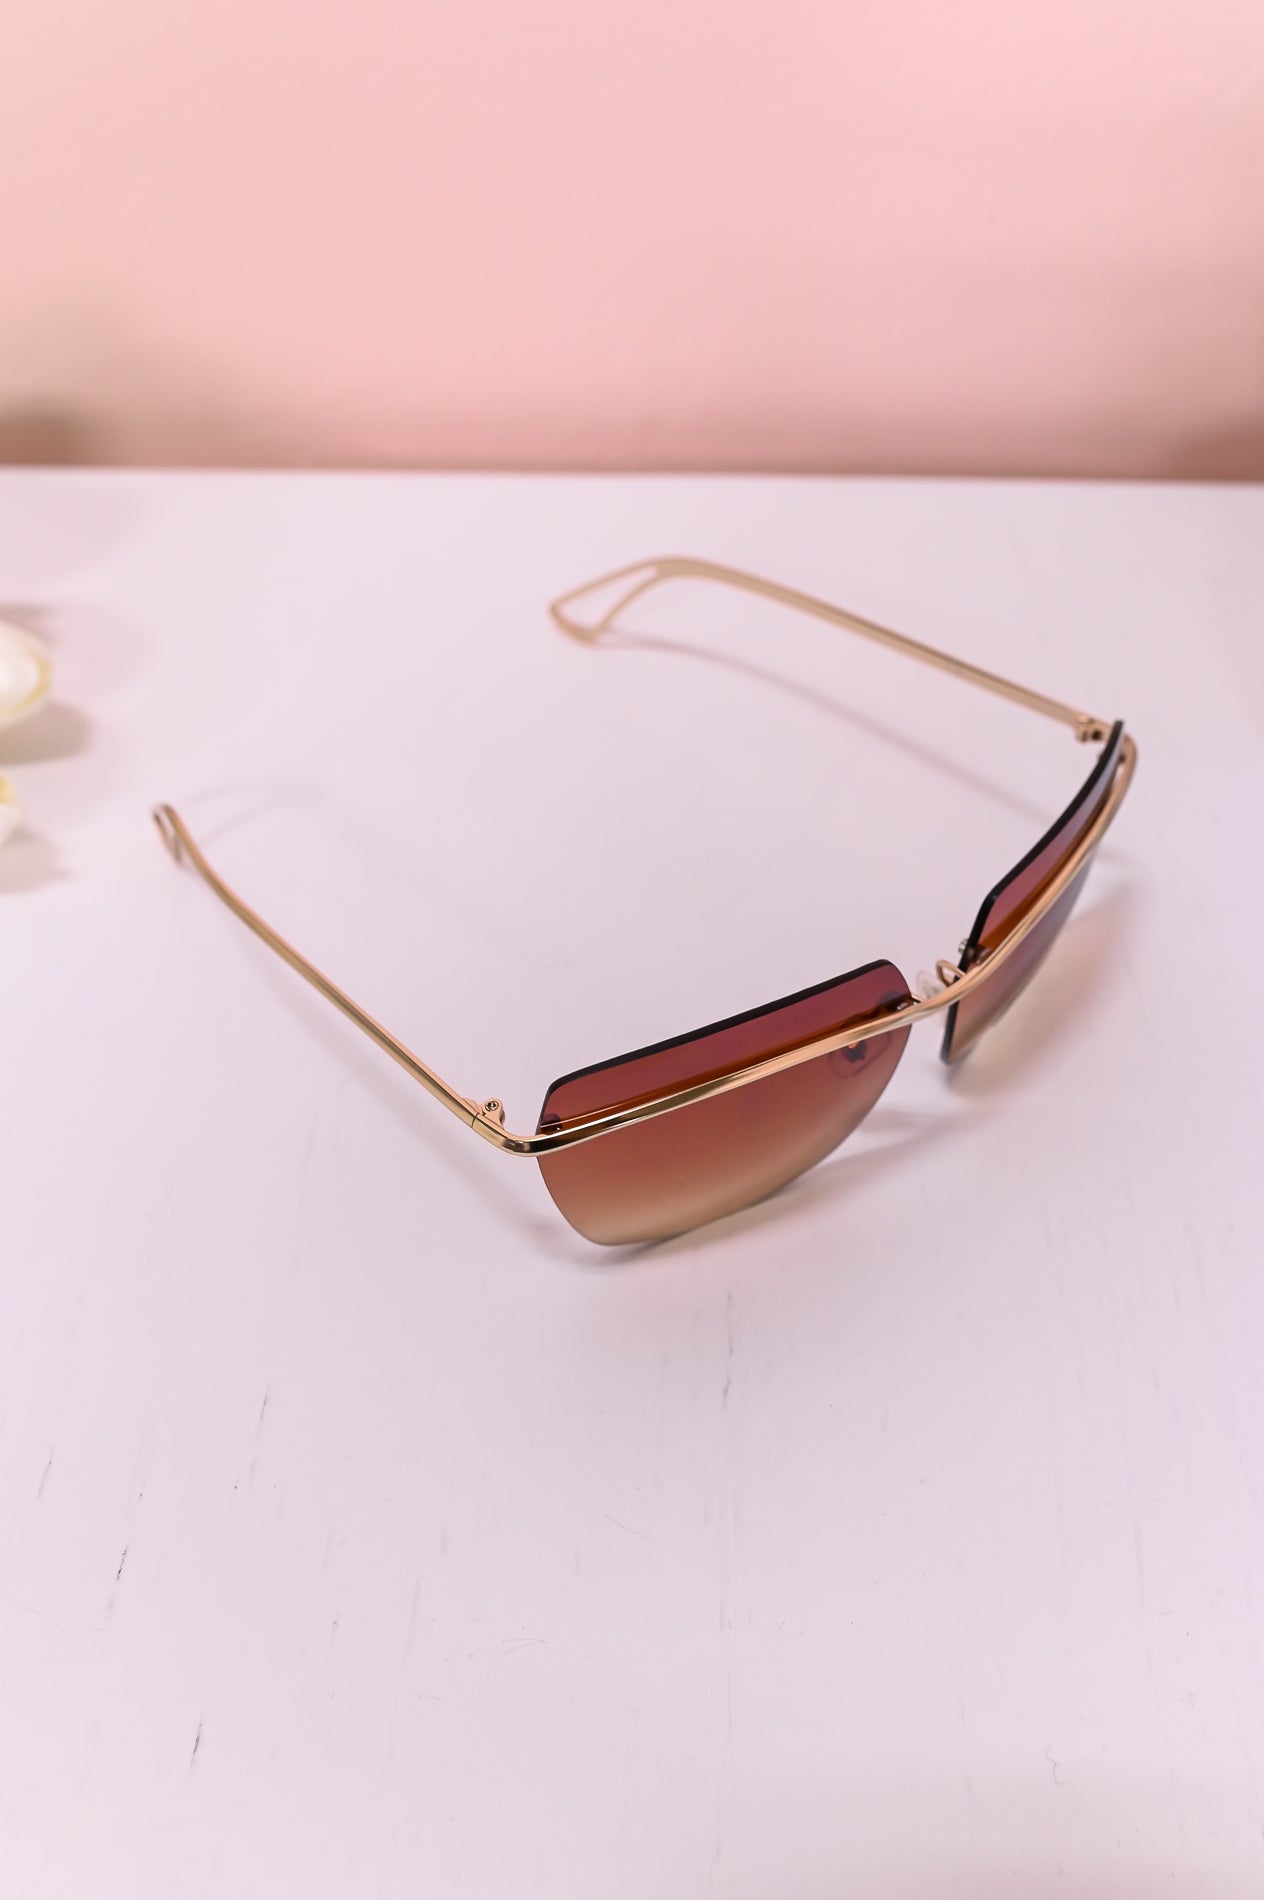 Taupe/Bronze Sunglasses - SGL307TA - FREE hard case